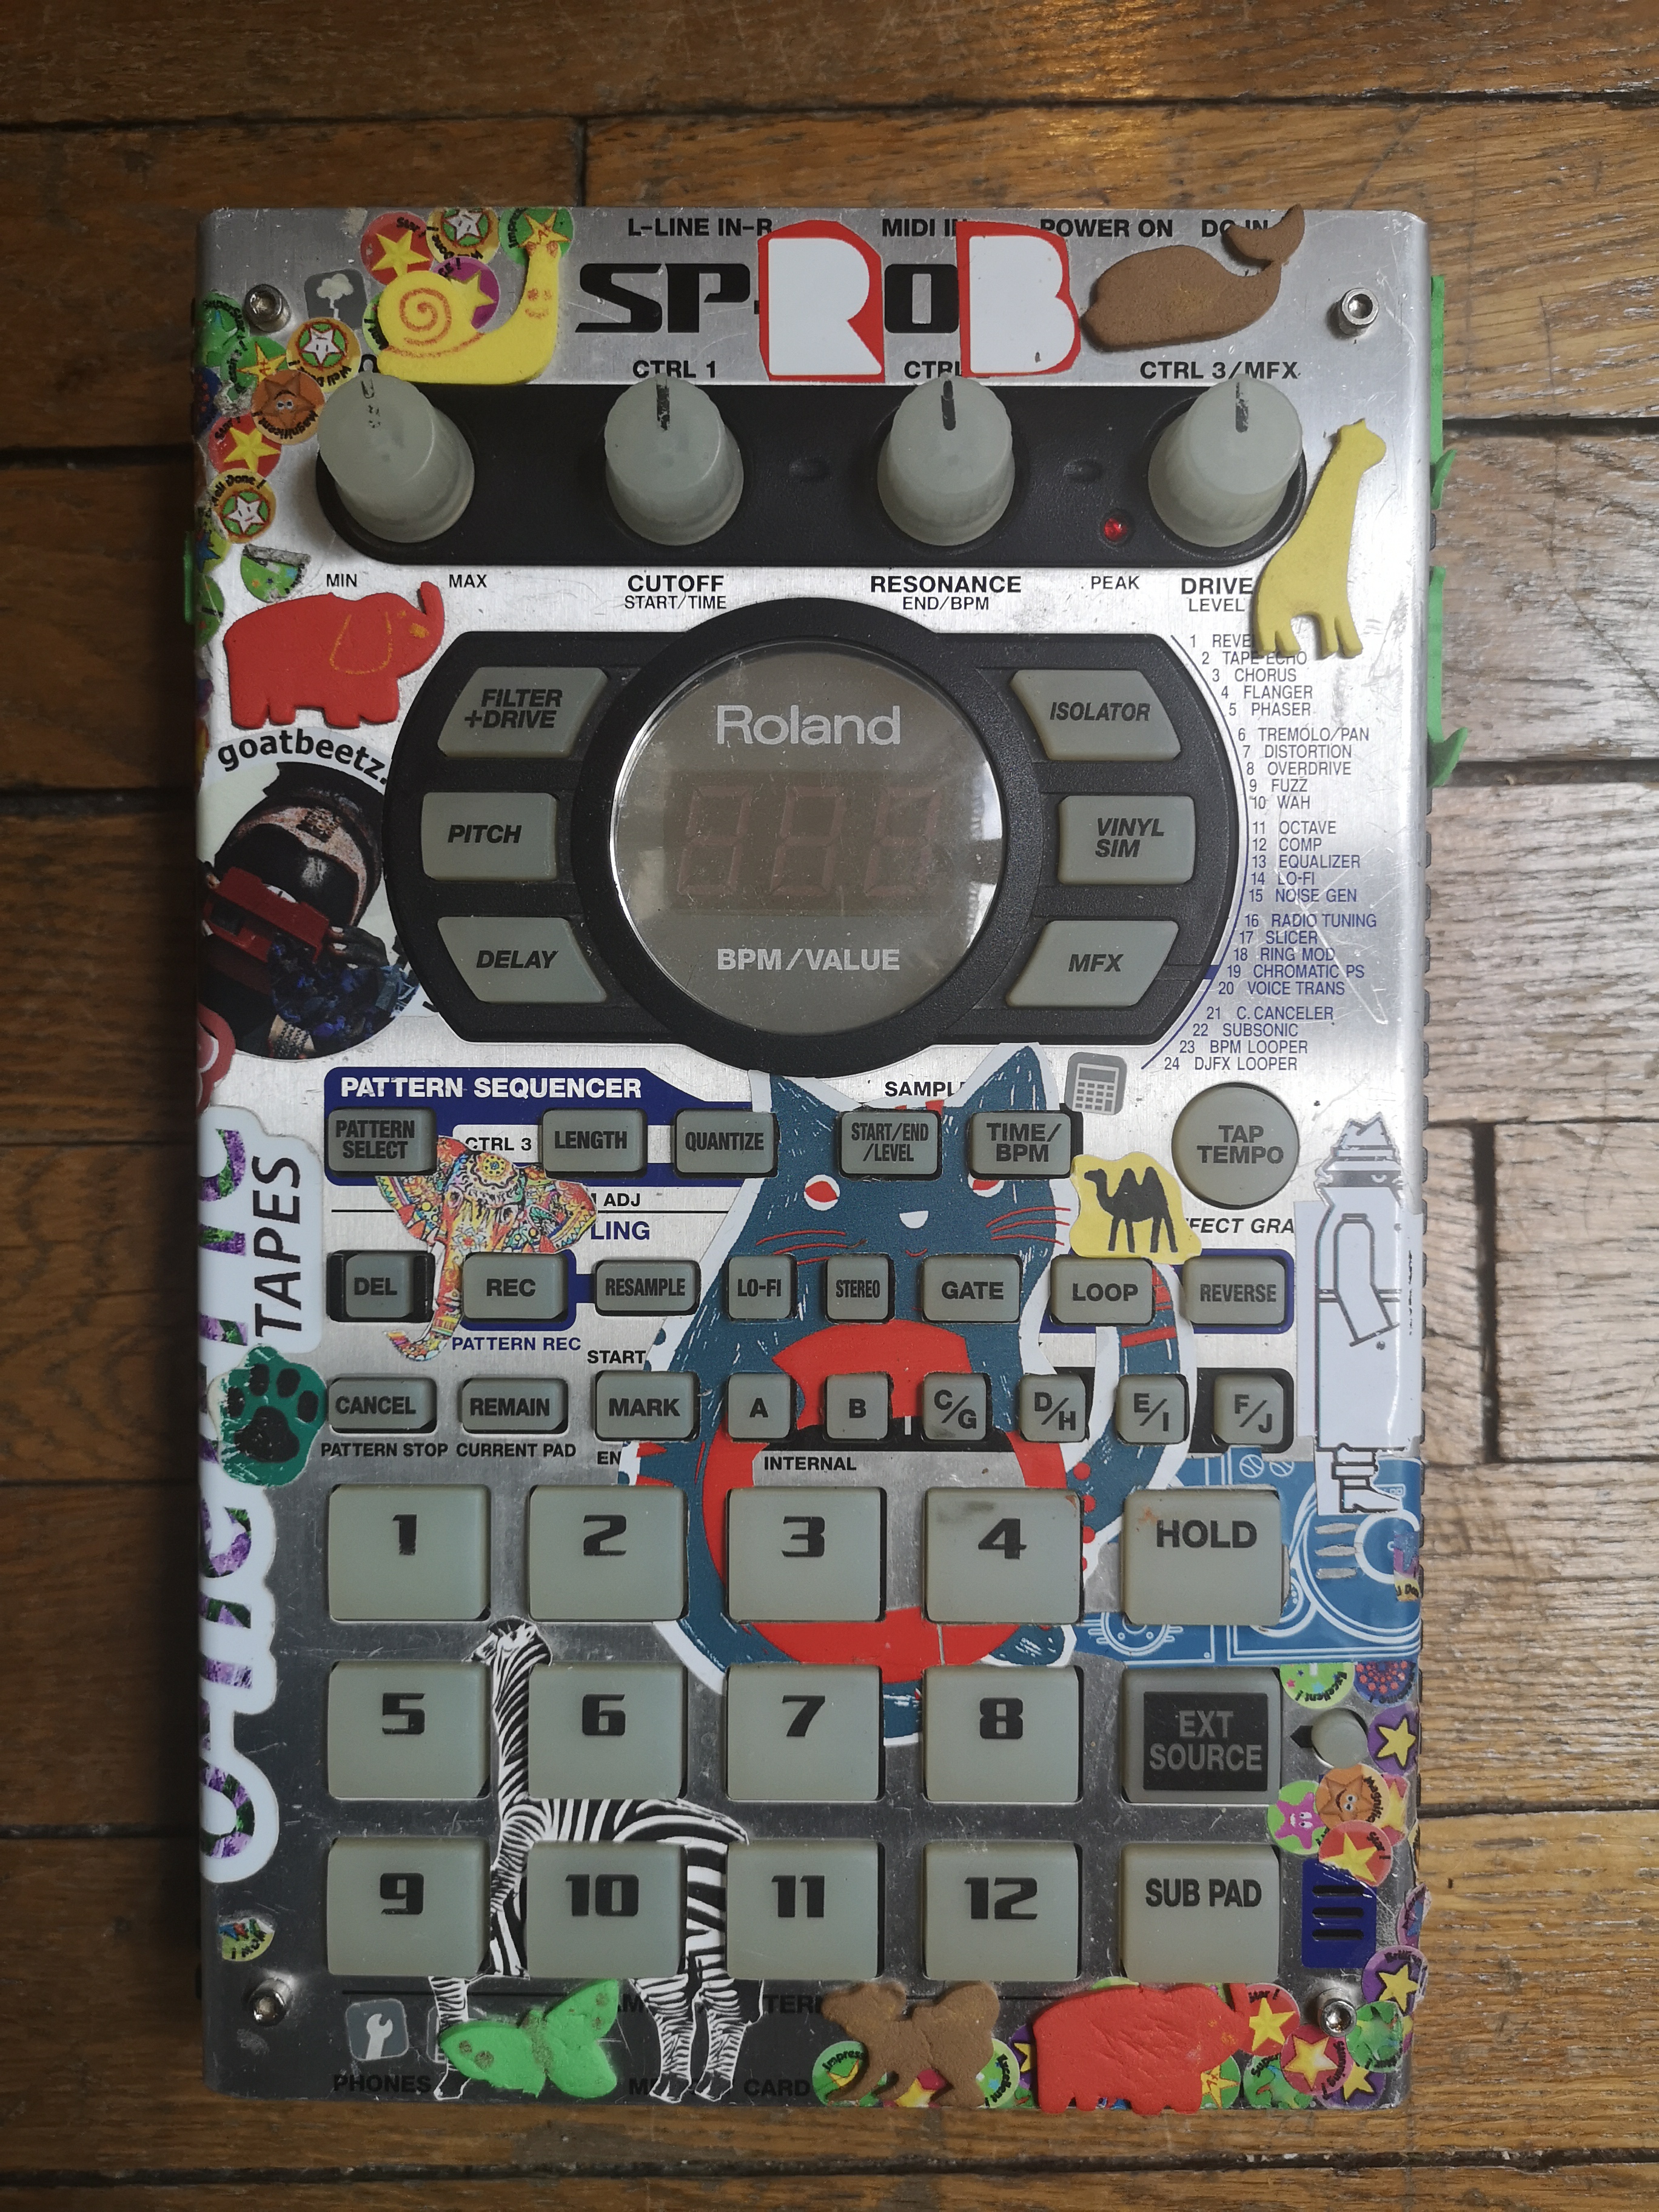 SP-404A - Roland SP-404A - Audiofanzine